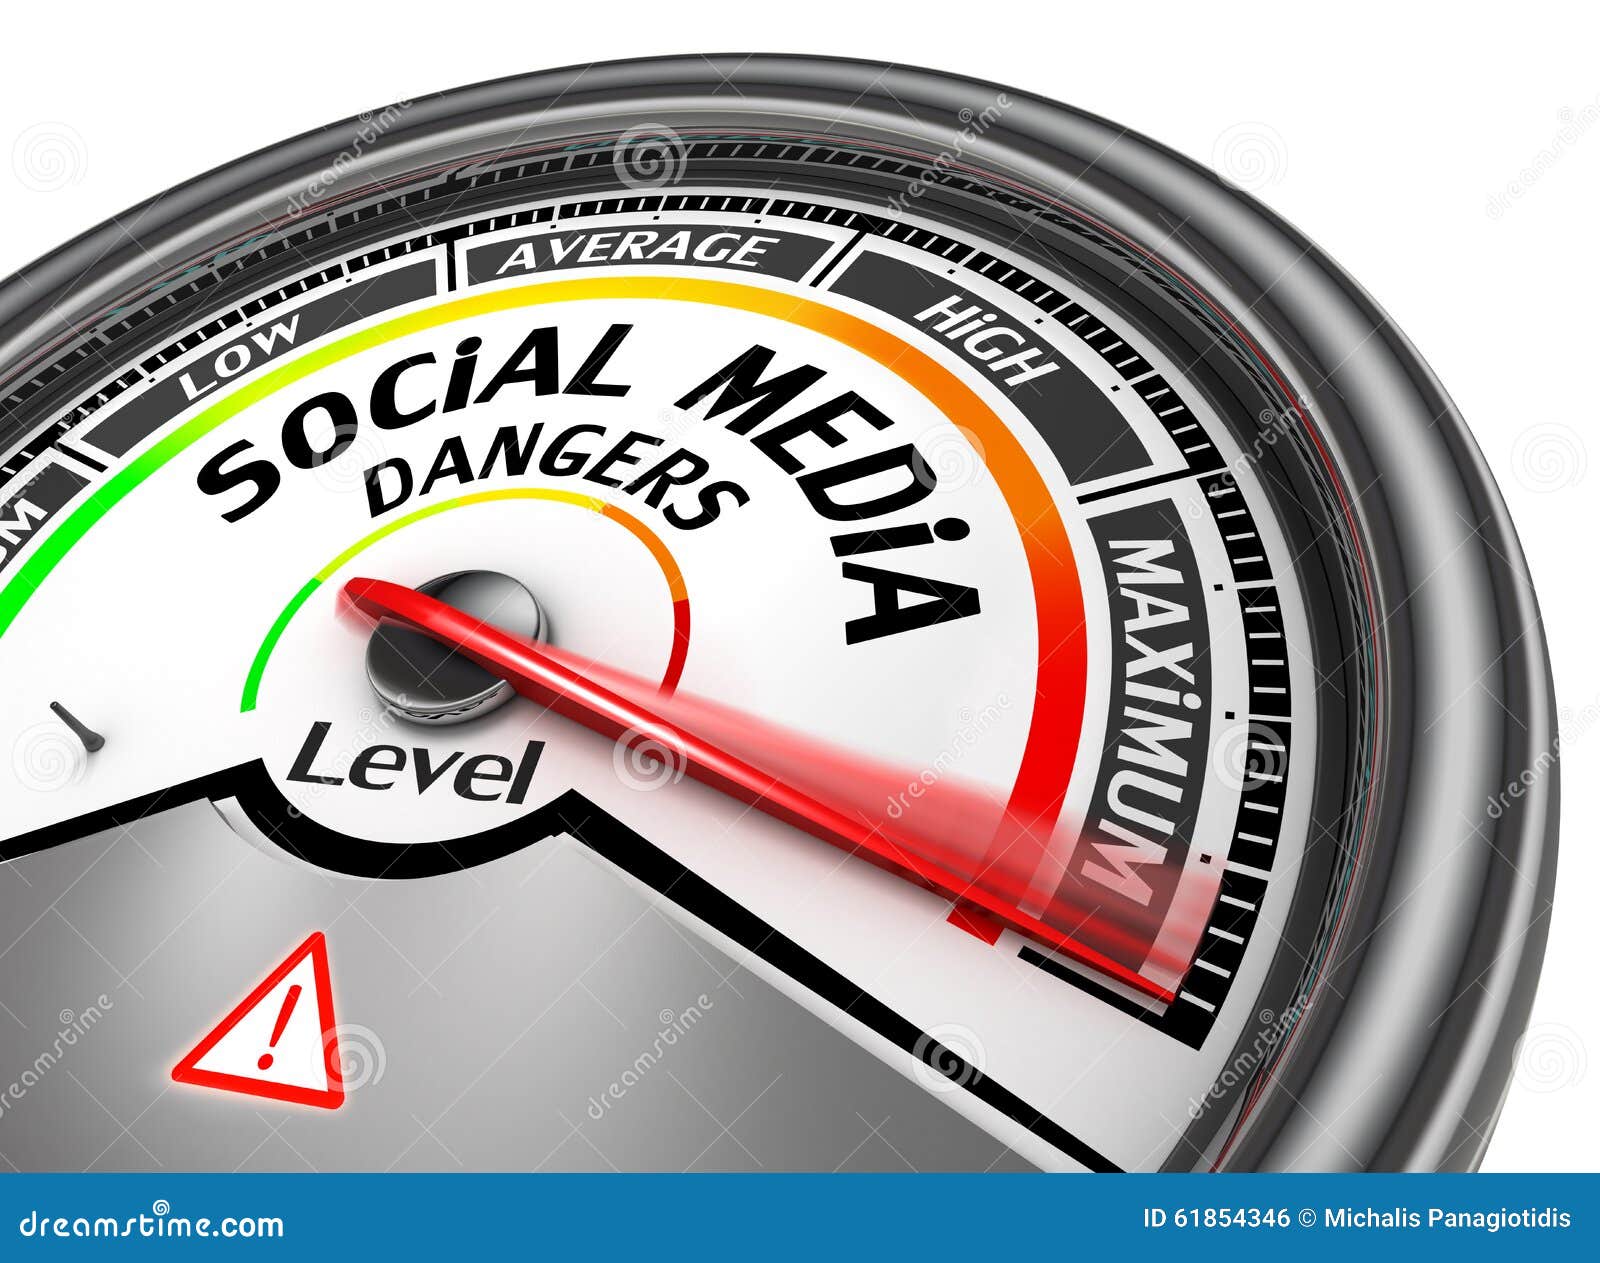 social media dangers level to maximum modern conceptual meter